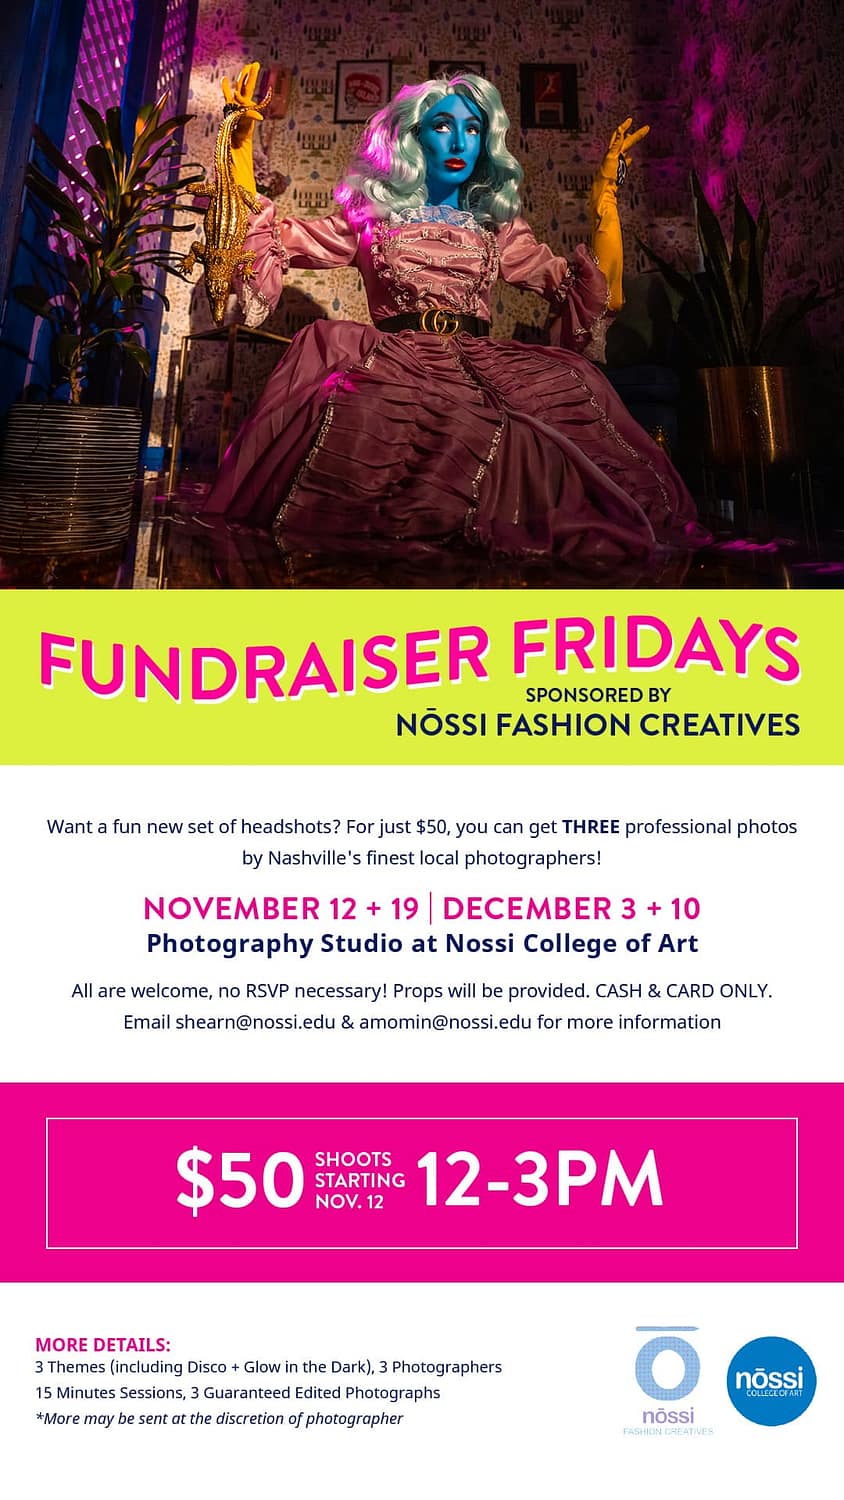 Fashion Creatives Photoshoot Fundraiser